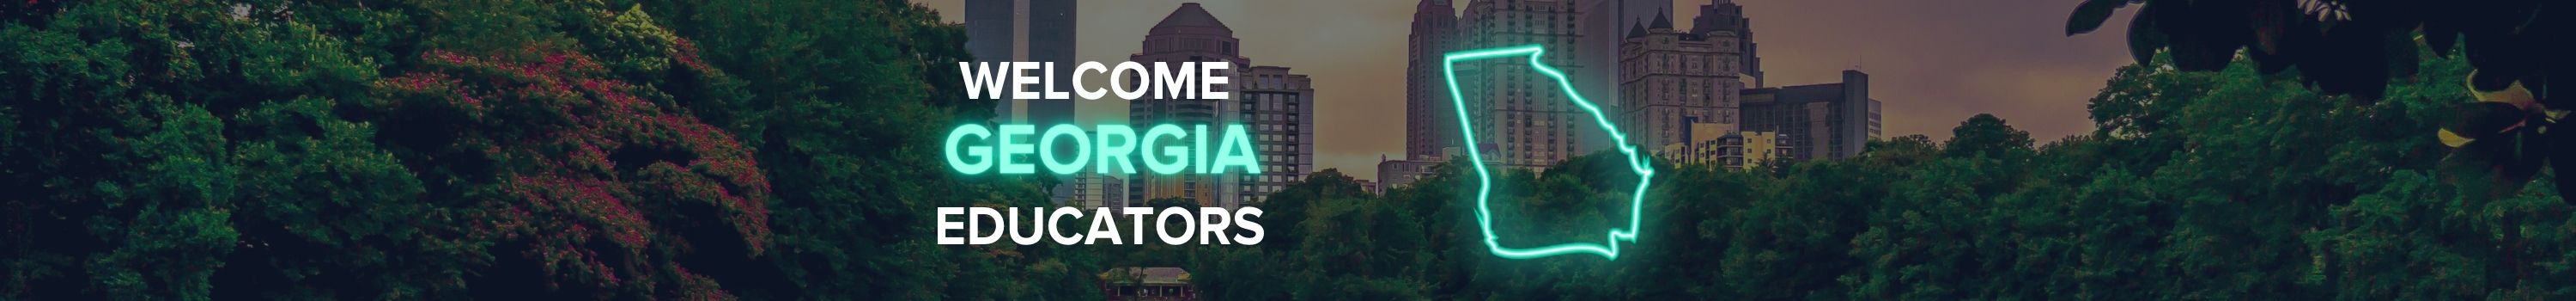 Welcome Georgia Educators